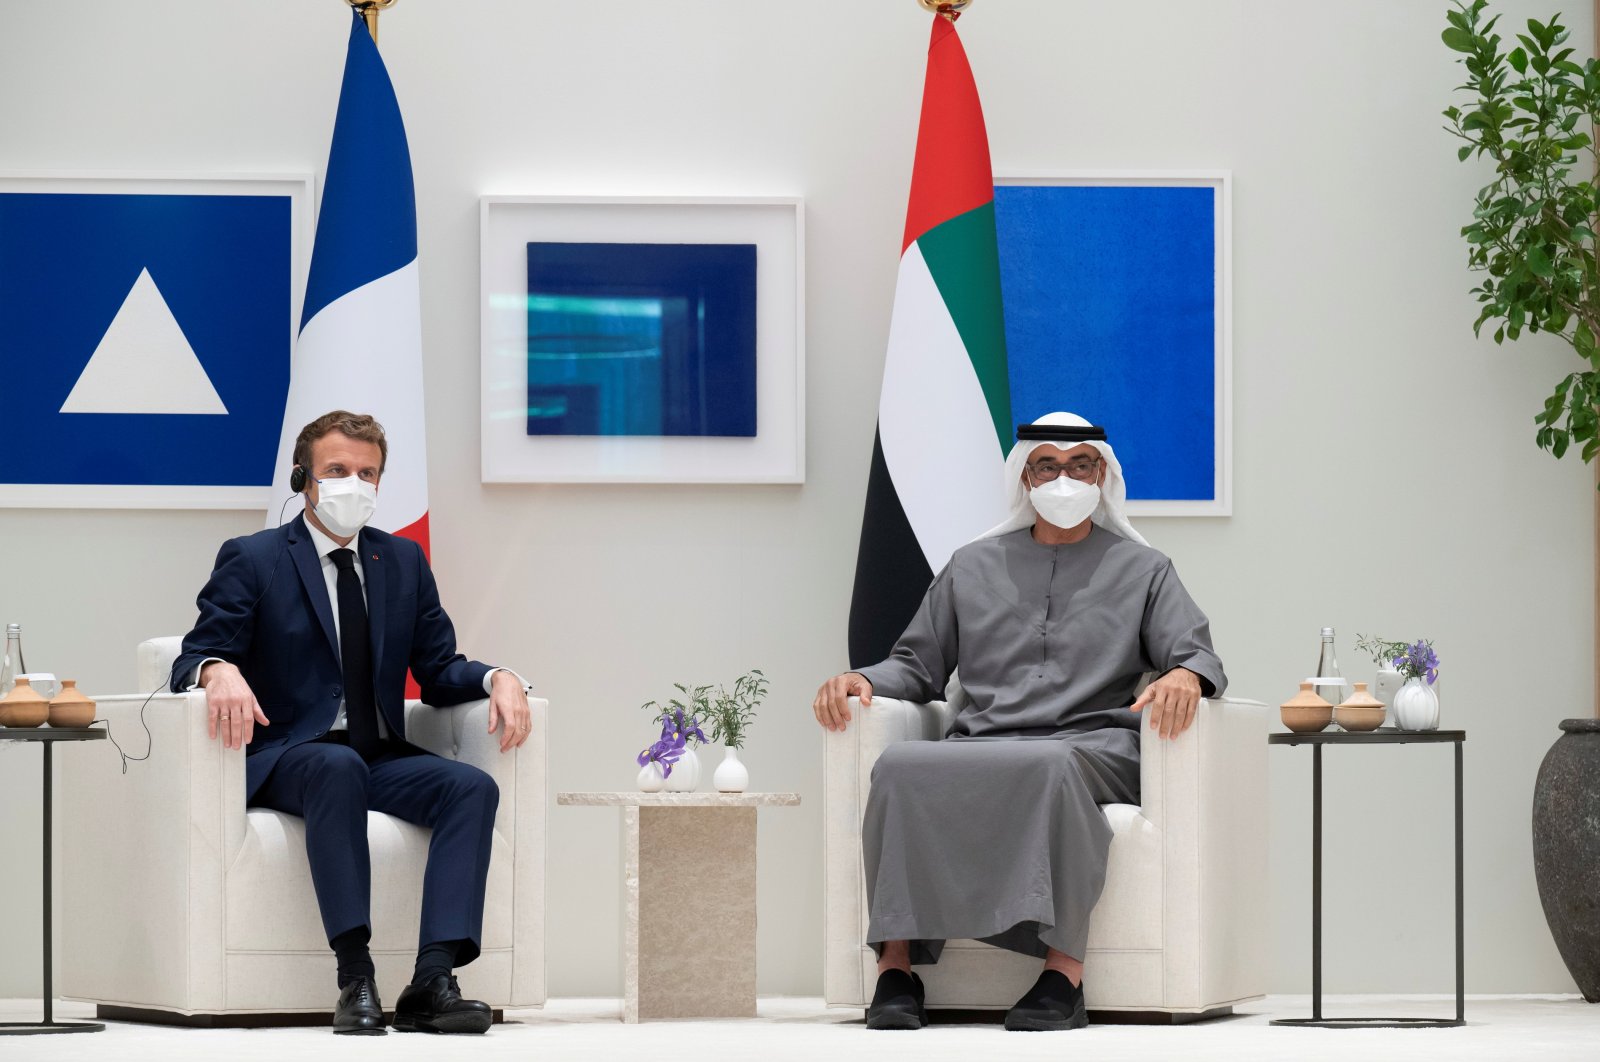 French President Emmanuel Macron (L) meets with Abu Dhabi&#039;s Crown Prince Sheikh Mohammed bin Zayed Al Nahyan (MBZ) in Abu Dhabi, United Arab Emirates, Dec. 3, 2021. (Reuters Photo)